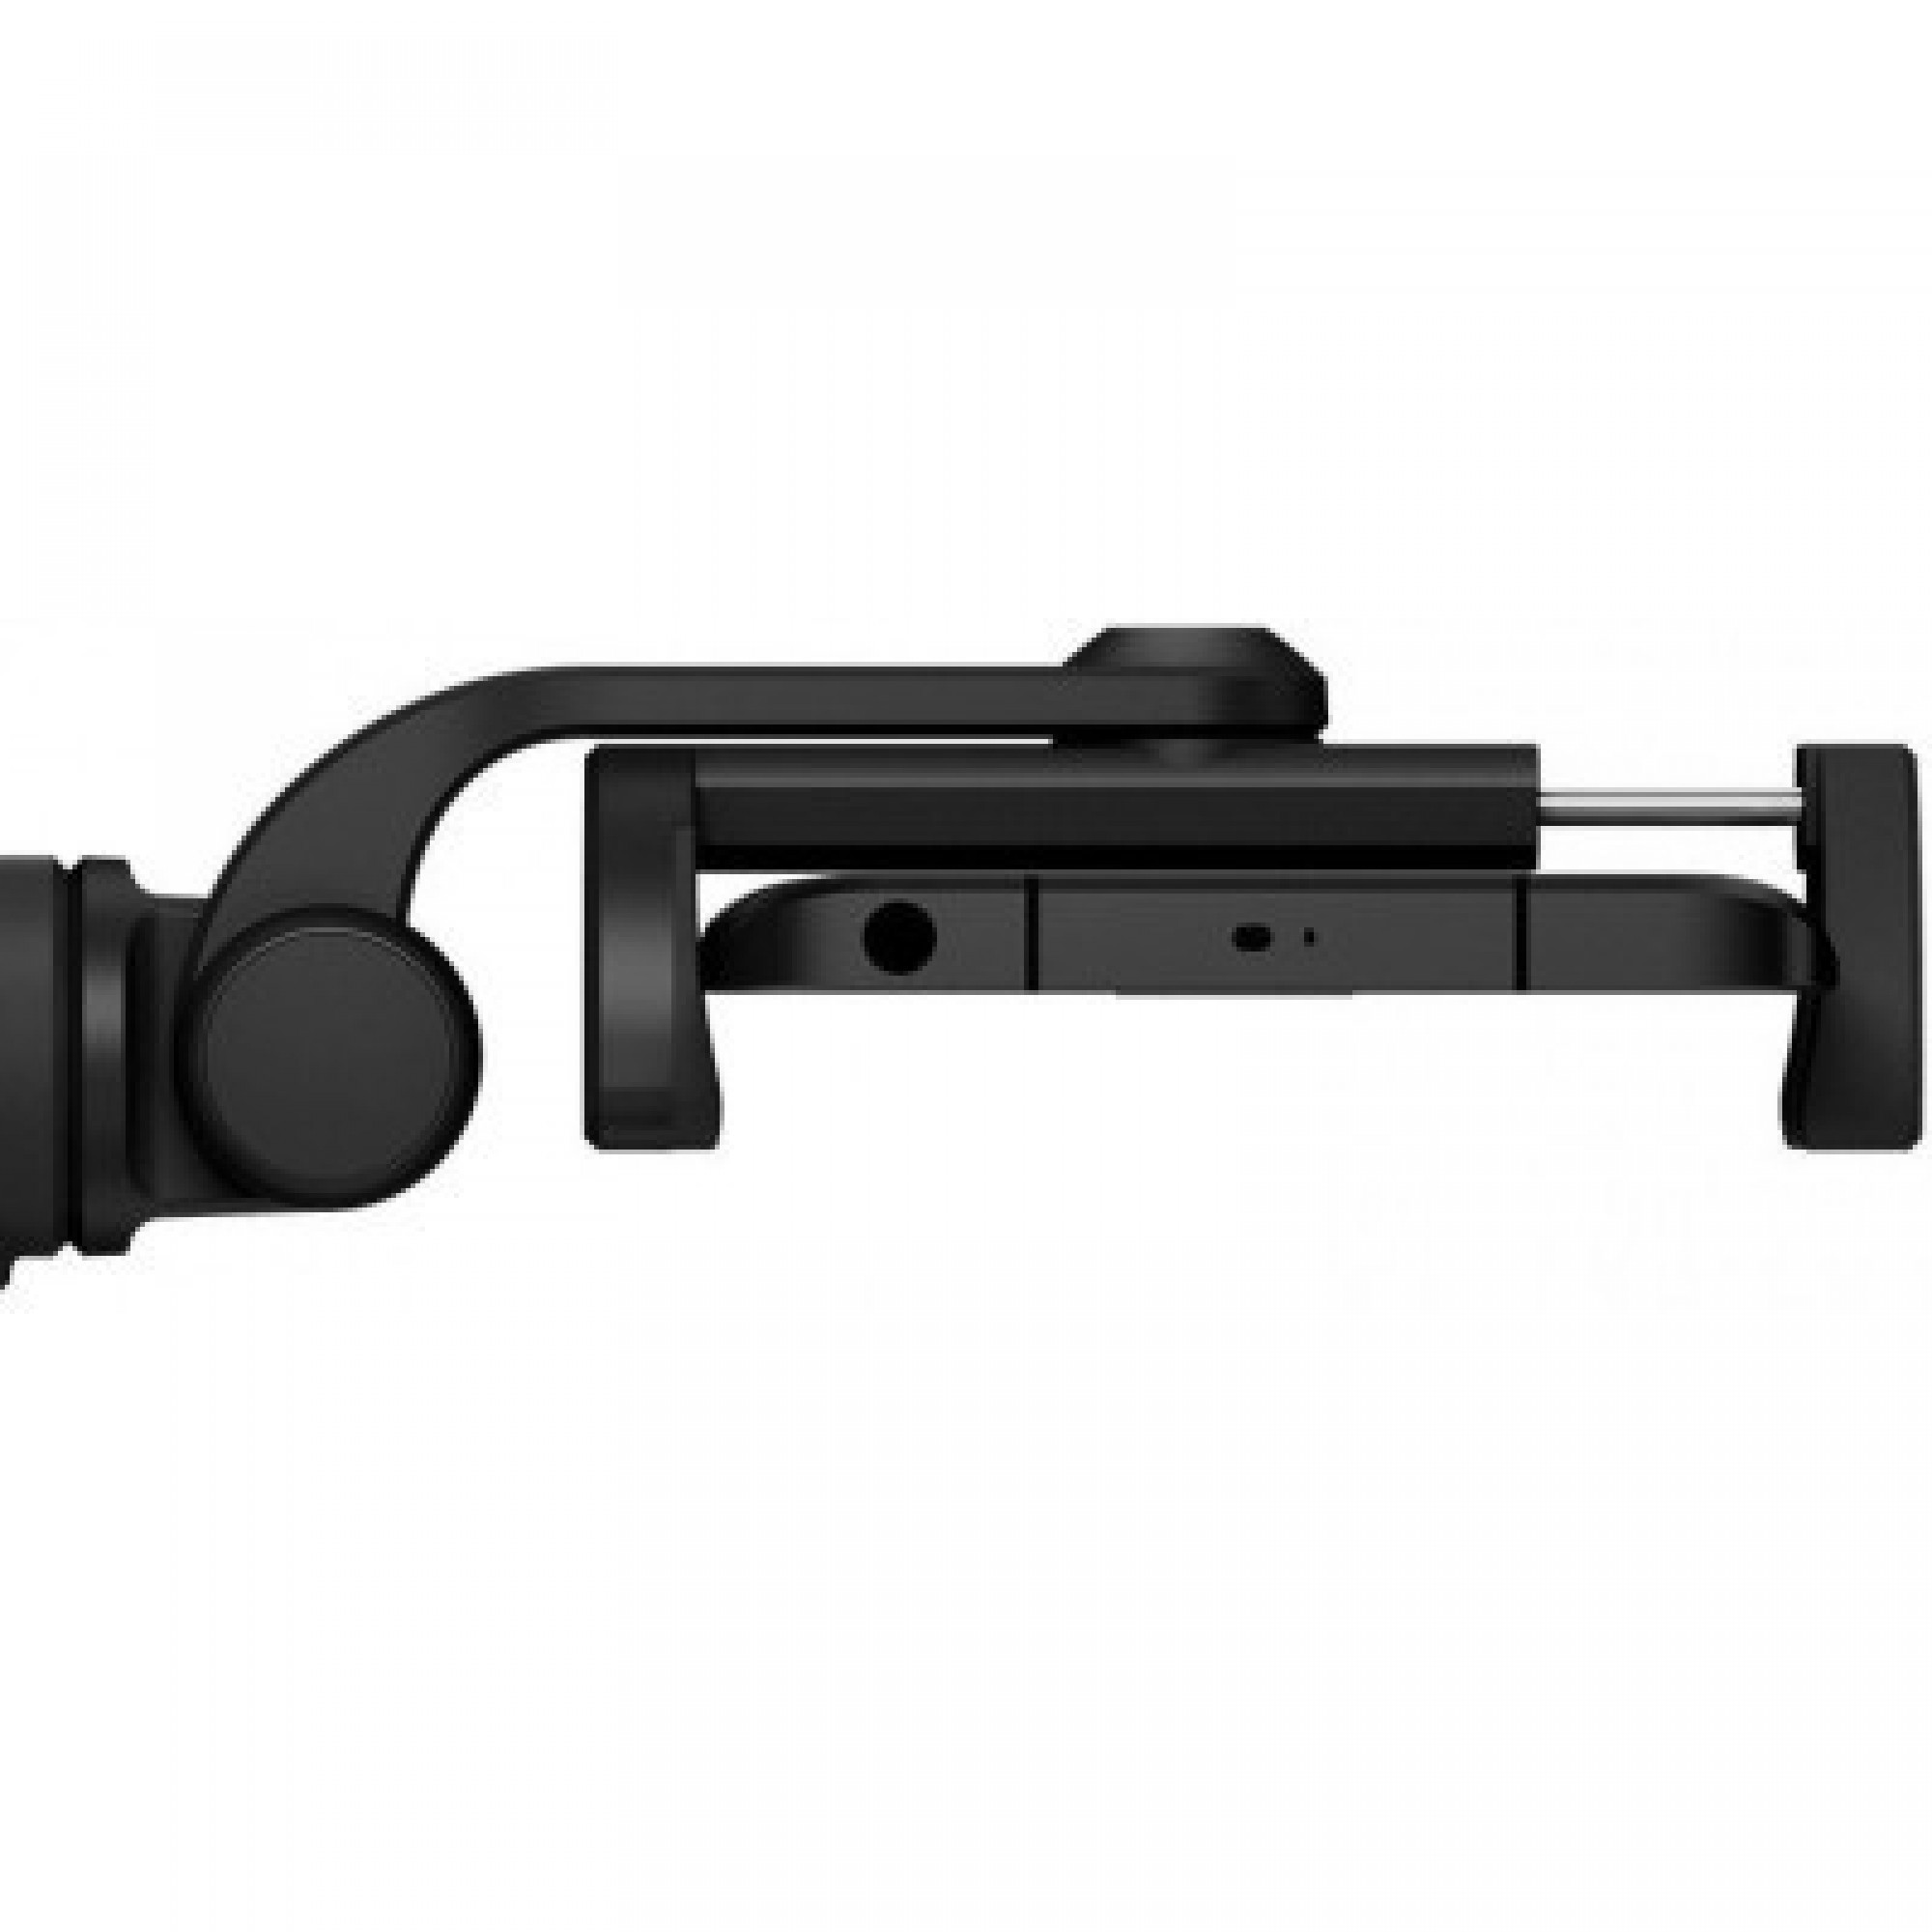 Монопод для селфі Xiaomi Selfie Stick Tripod Black (FBA4070US) (FBA4070US)